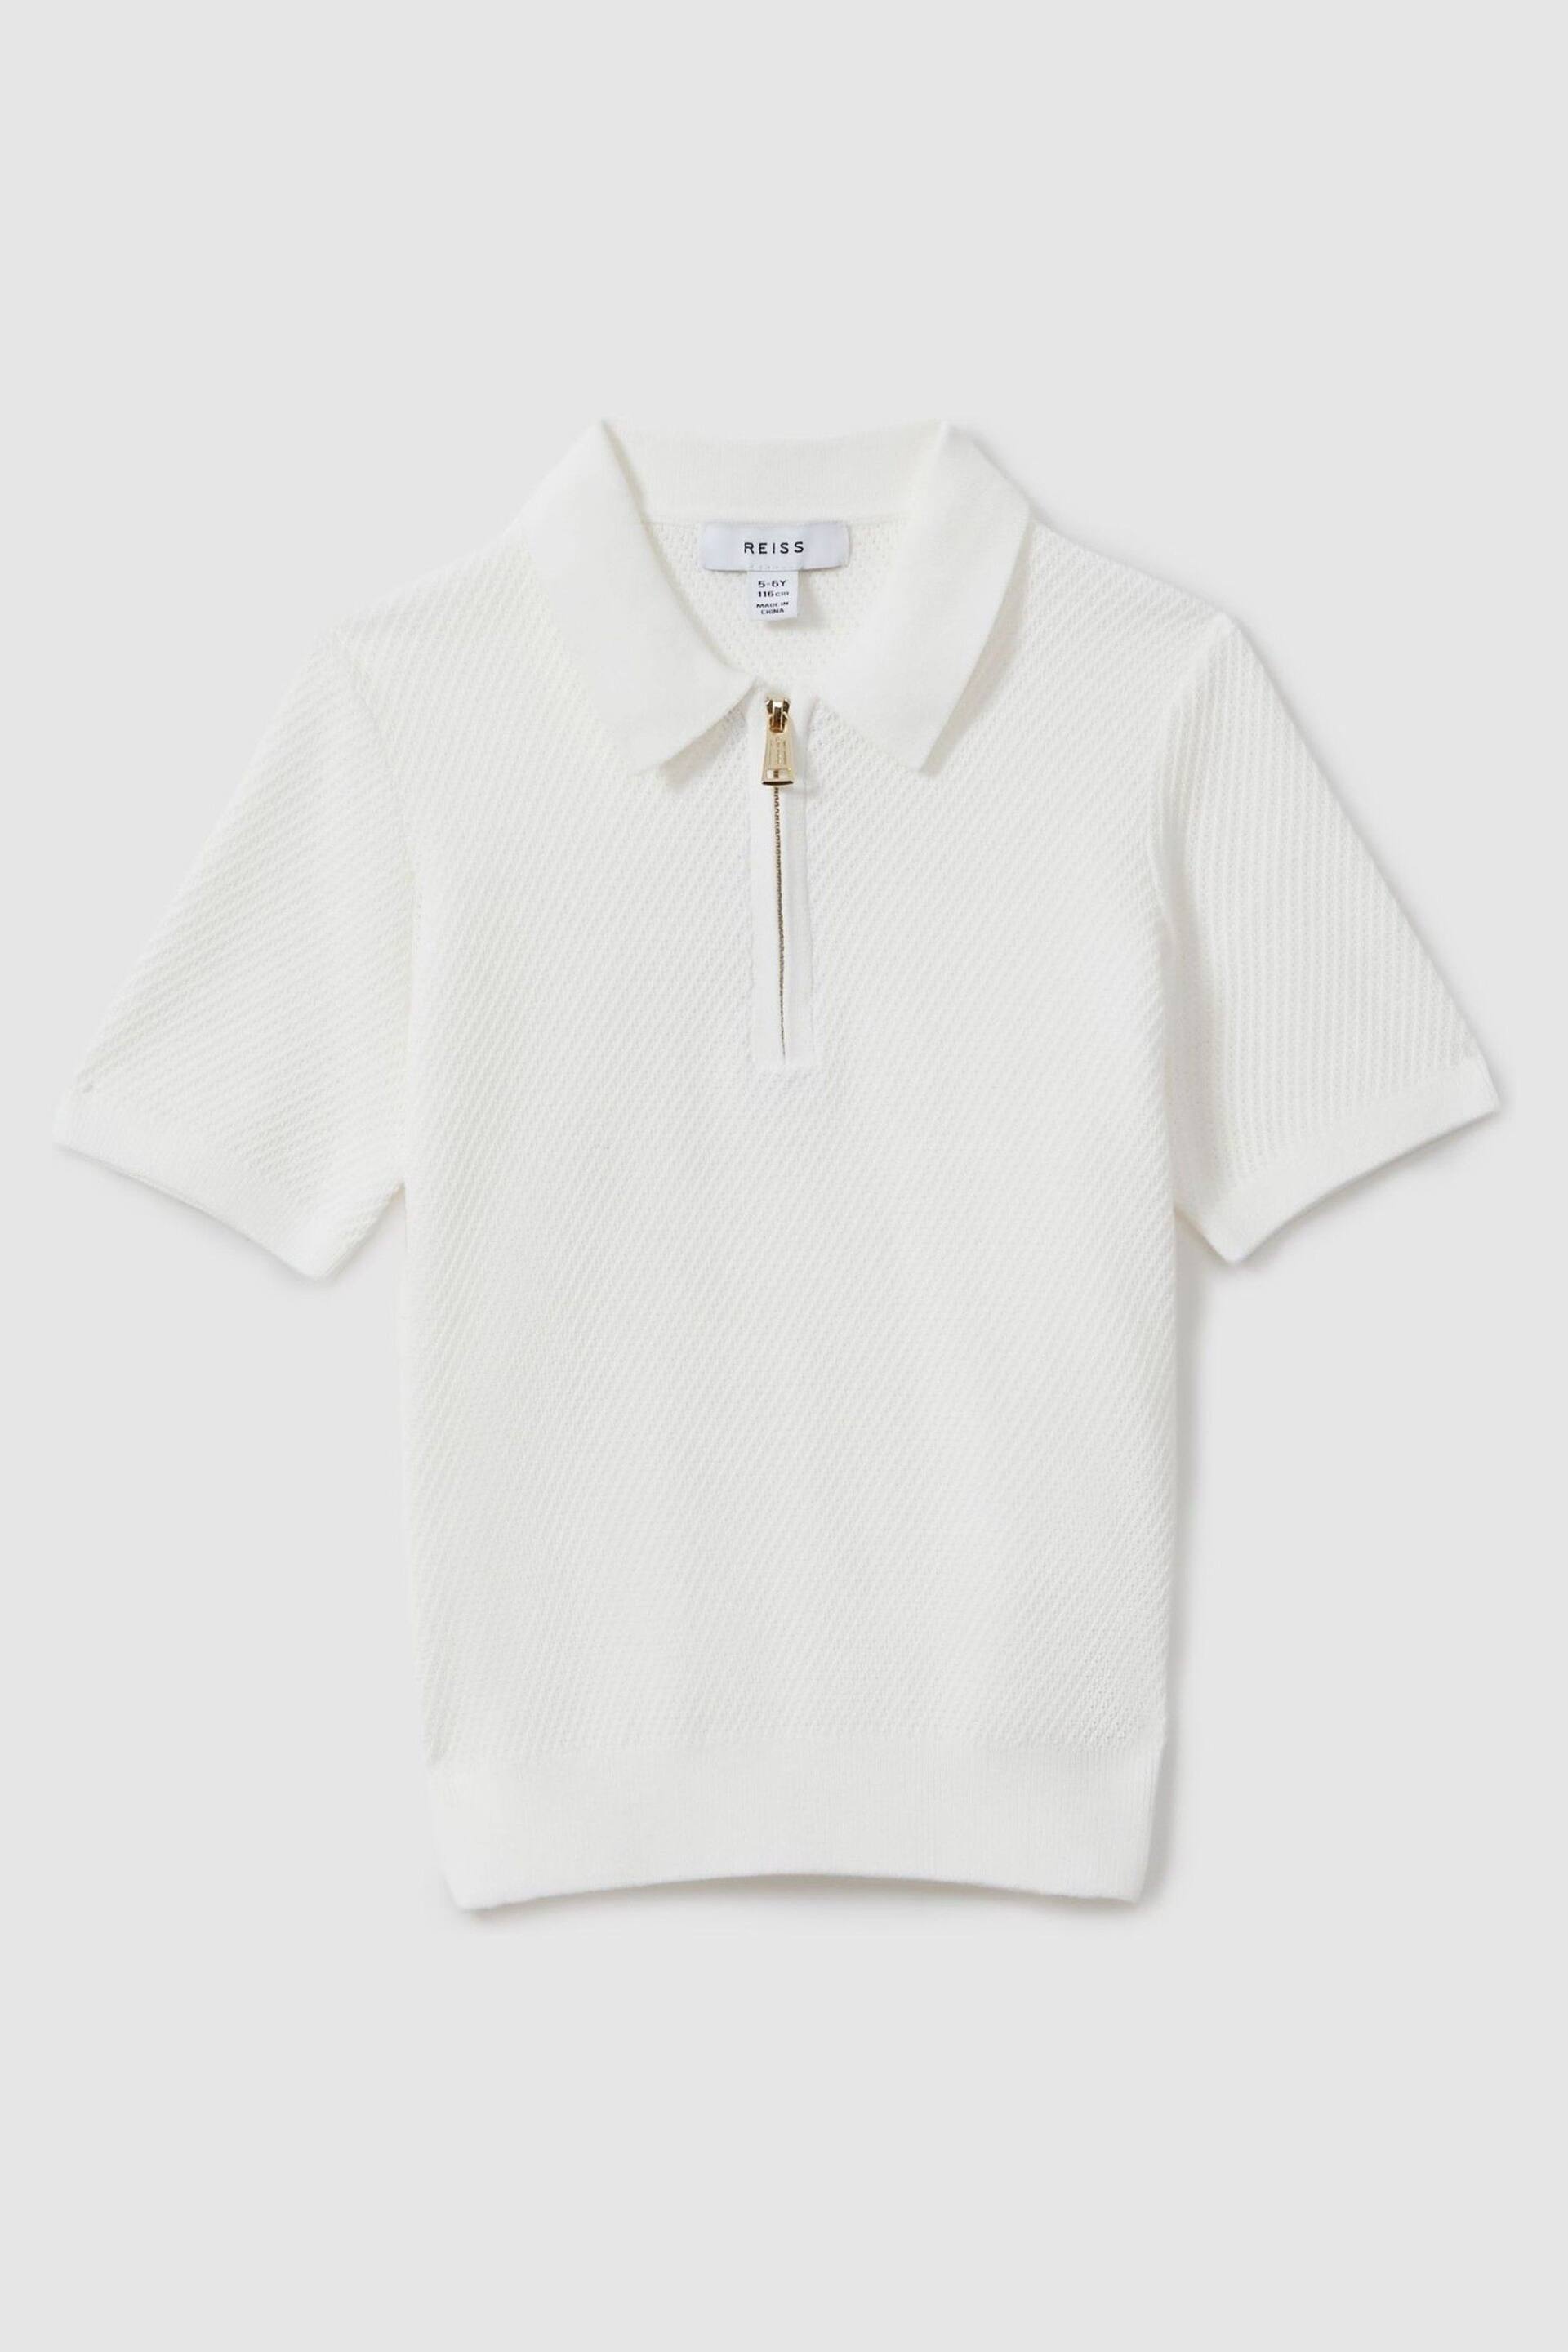 Reiss White Ivor Teen Textured Half-Zip Neck Polo Shirt - Image 1 of 5